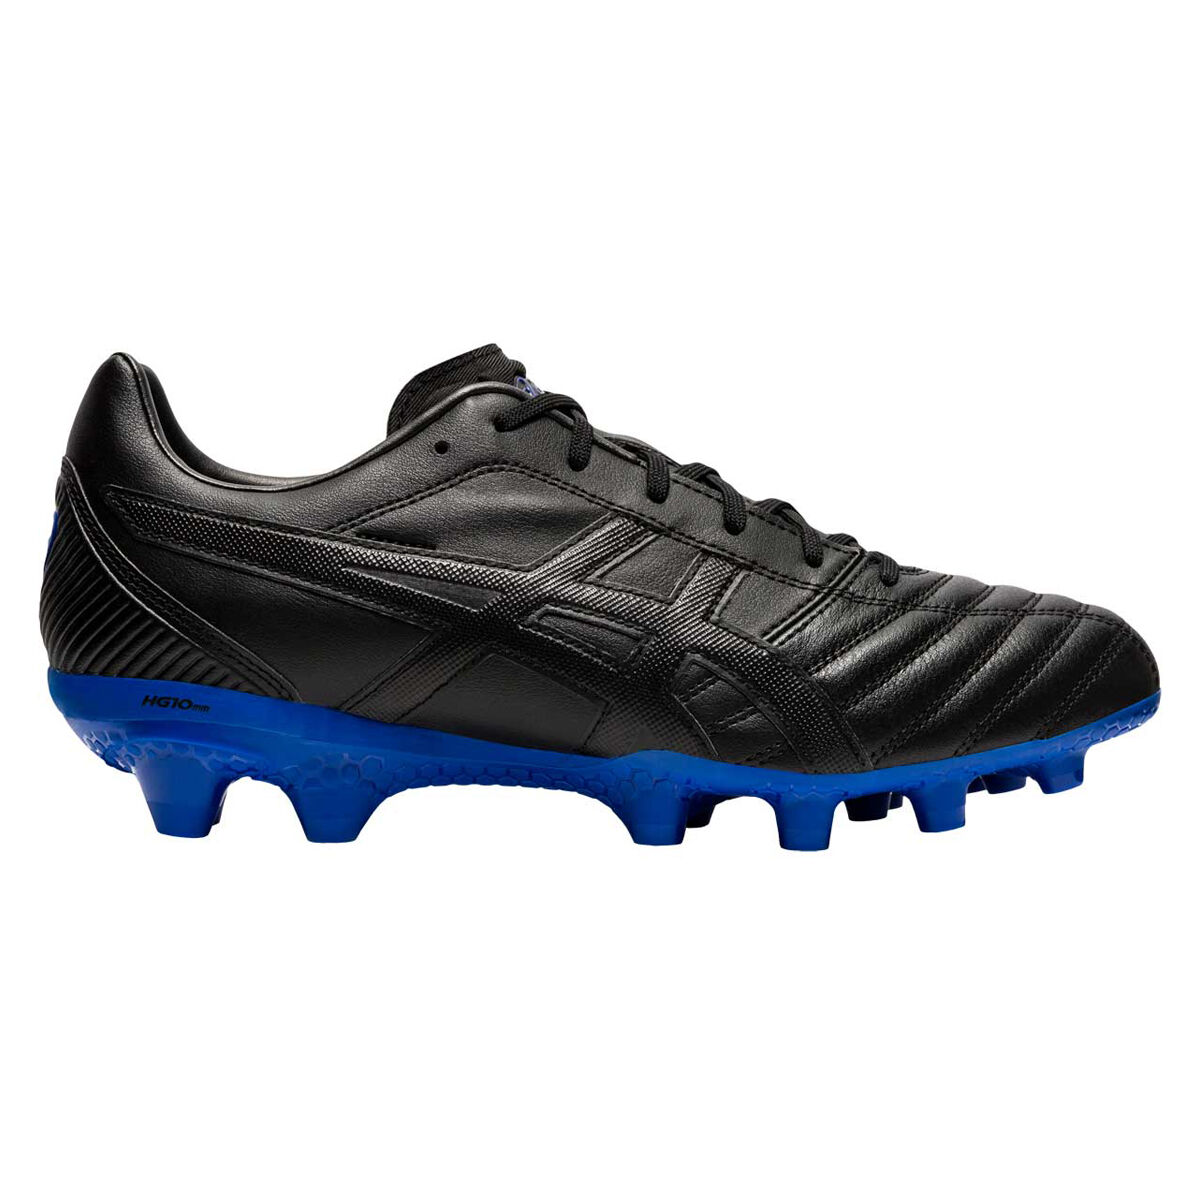 asics soccer boots sale